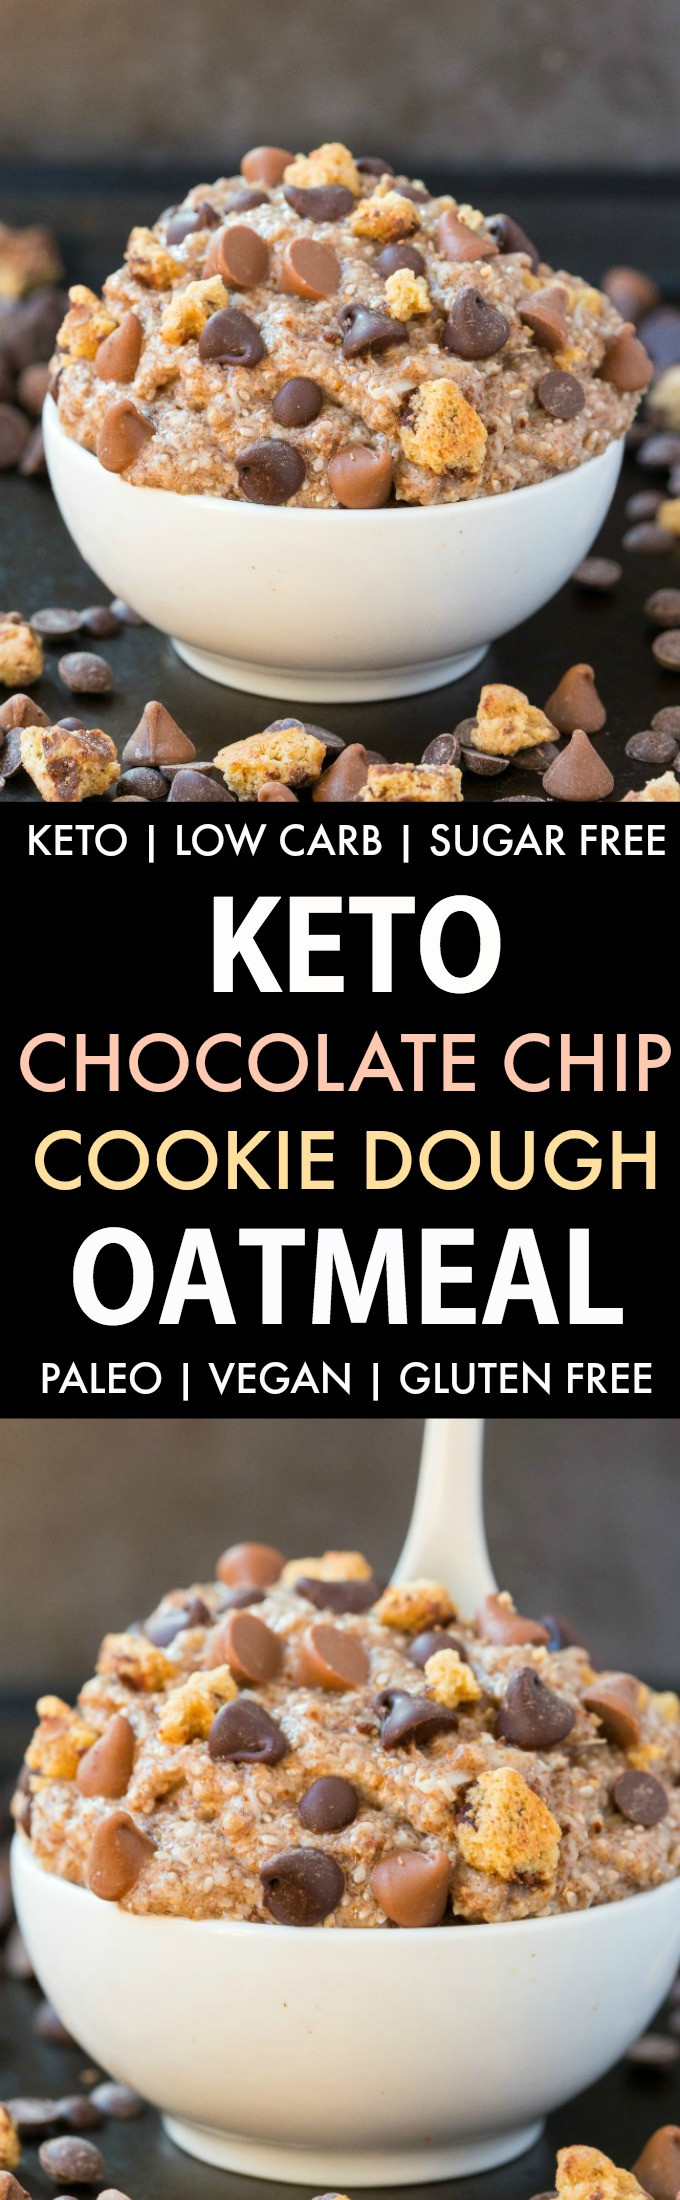 Keto Oatmeal Cookies
 Healthy Low Carb Keto Chocolate Chip Cookie Dough Oatmeal